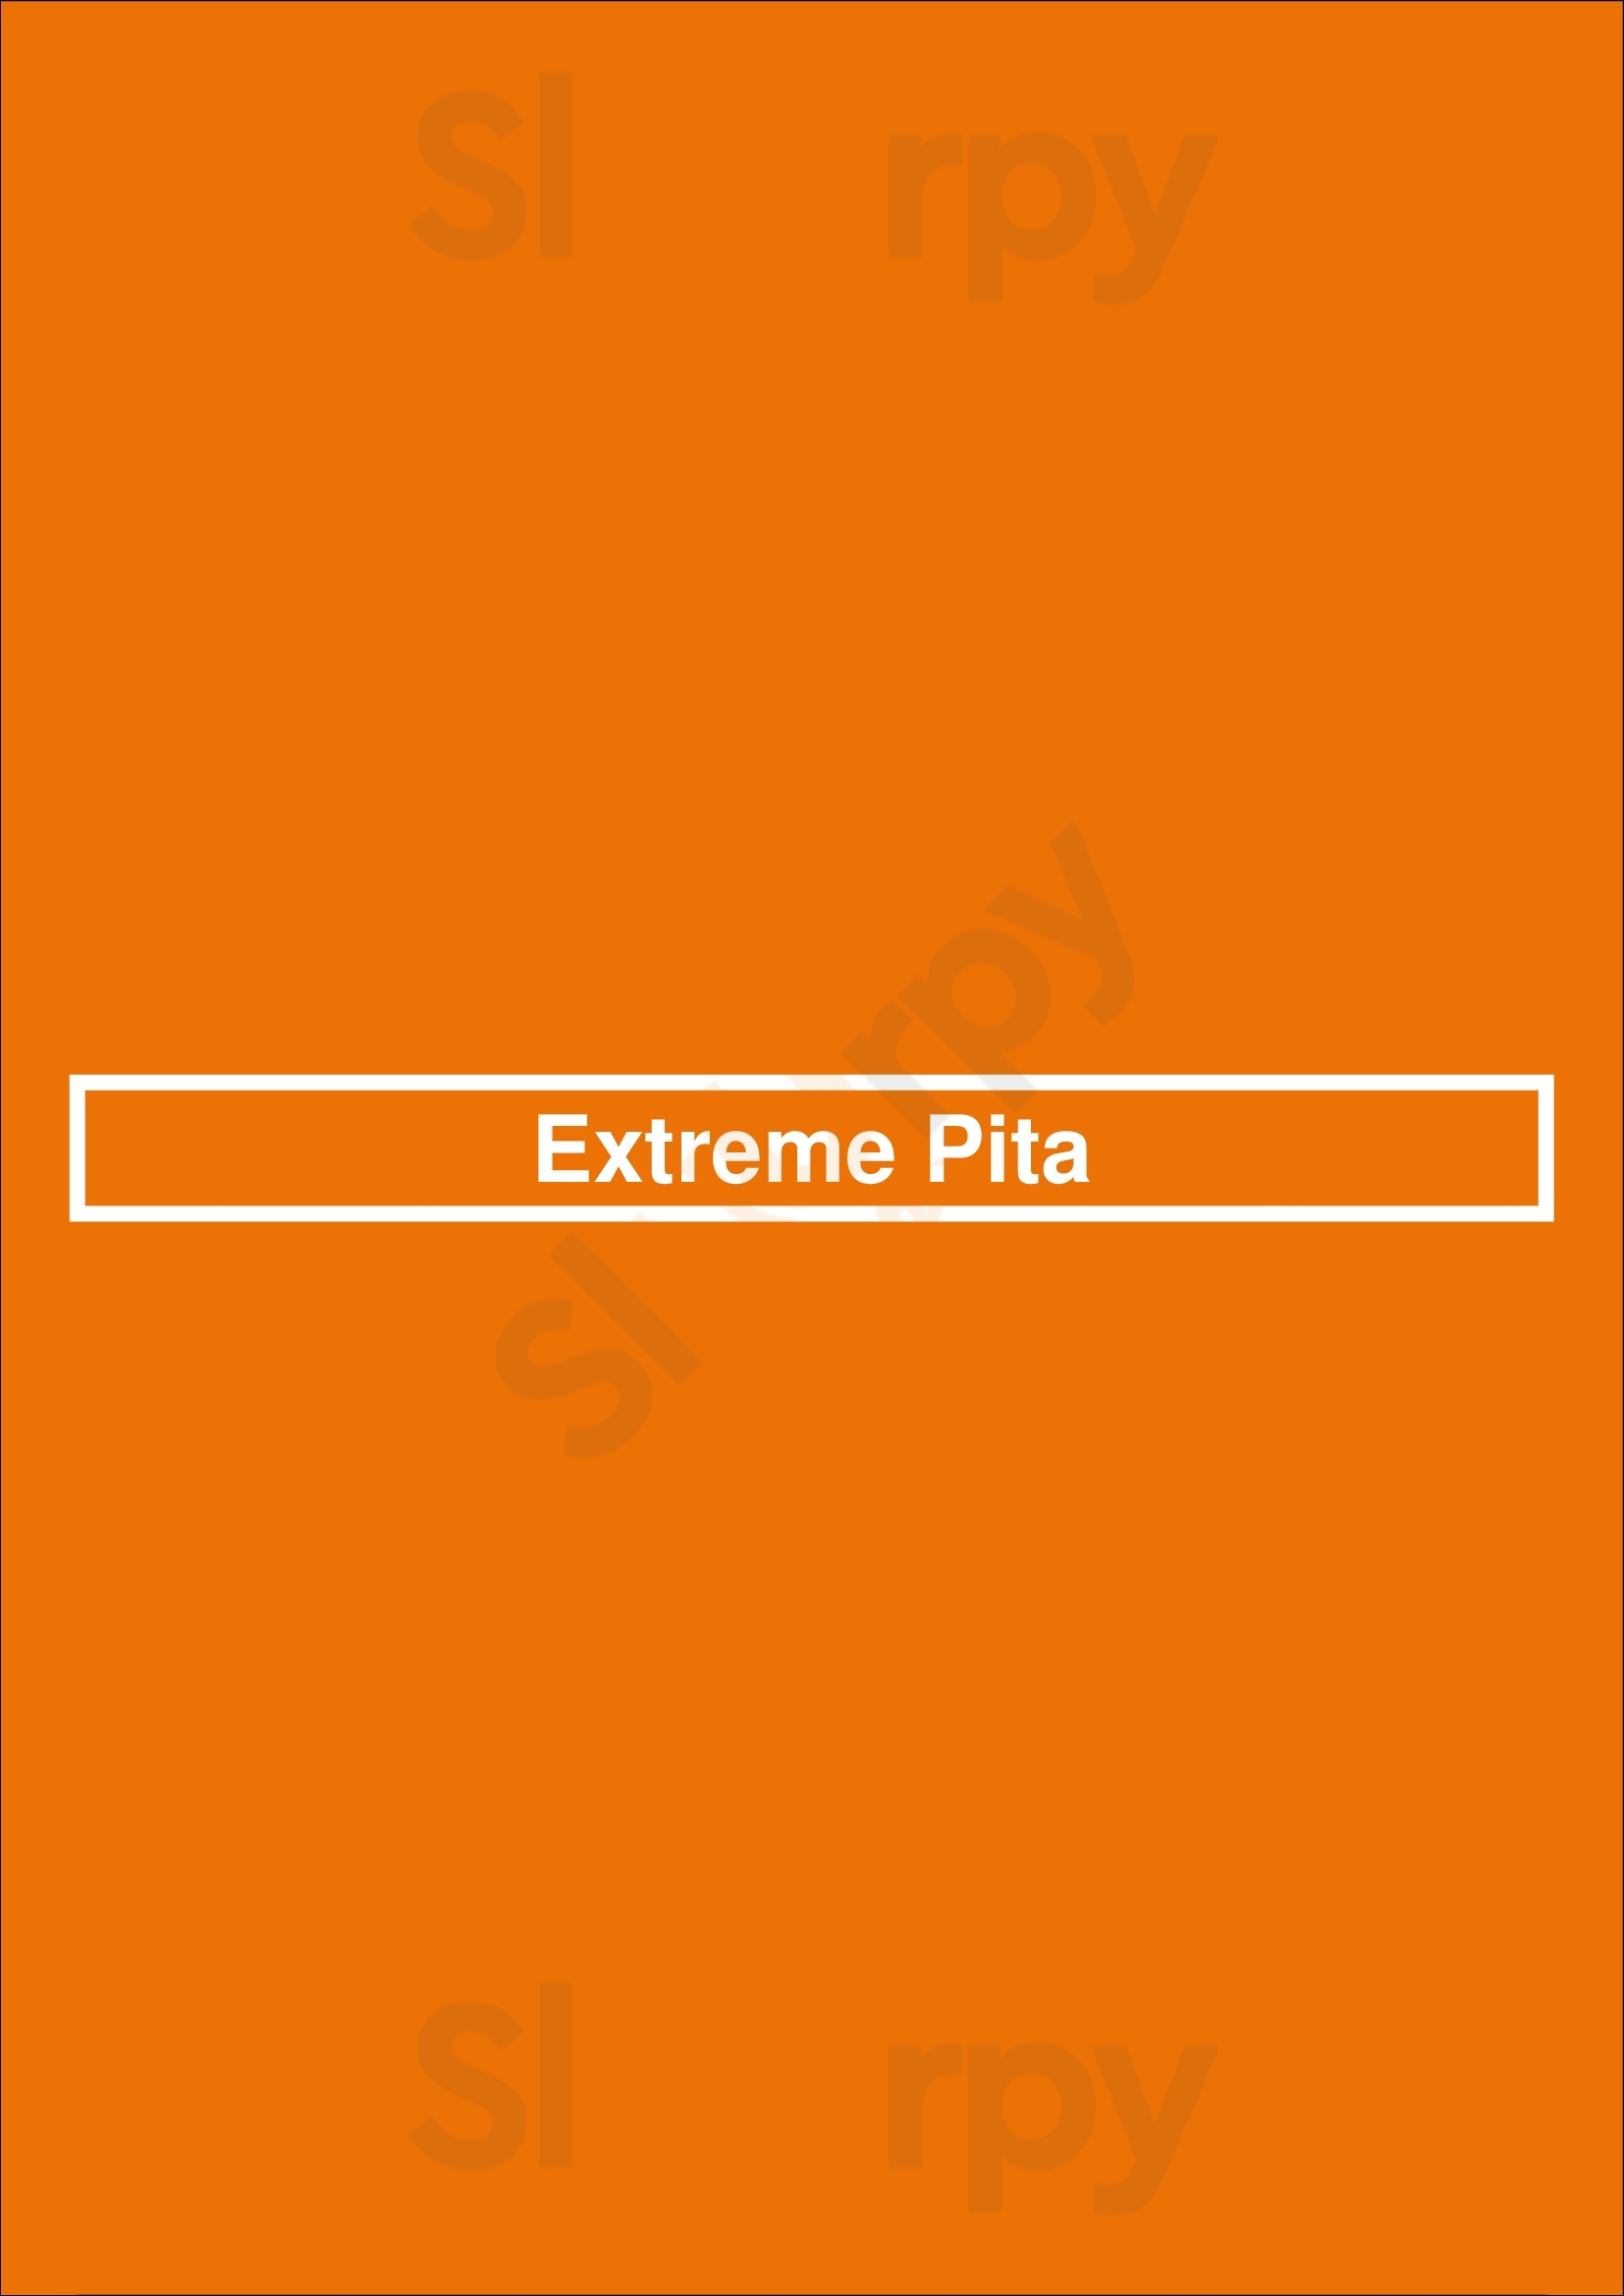 Extreme Pita Edmonton Menu - 1